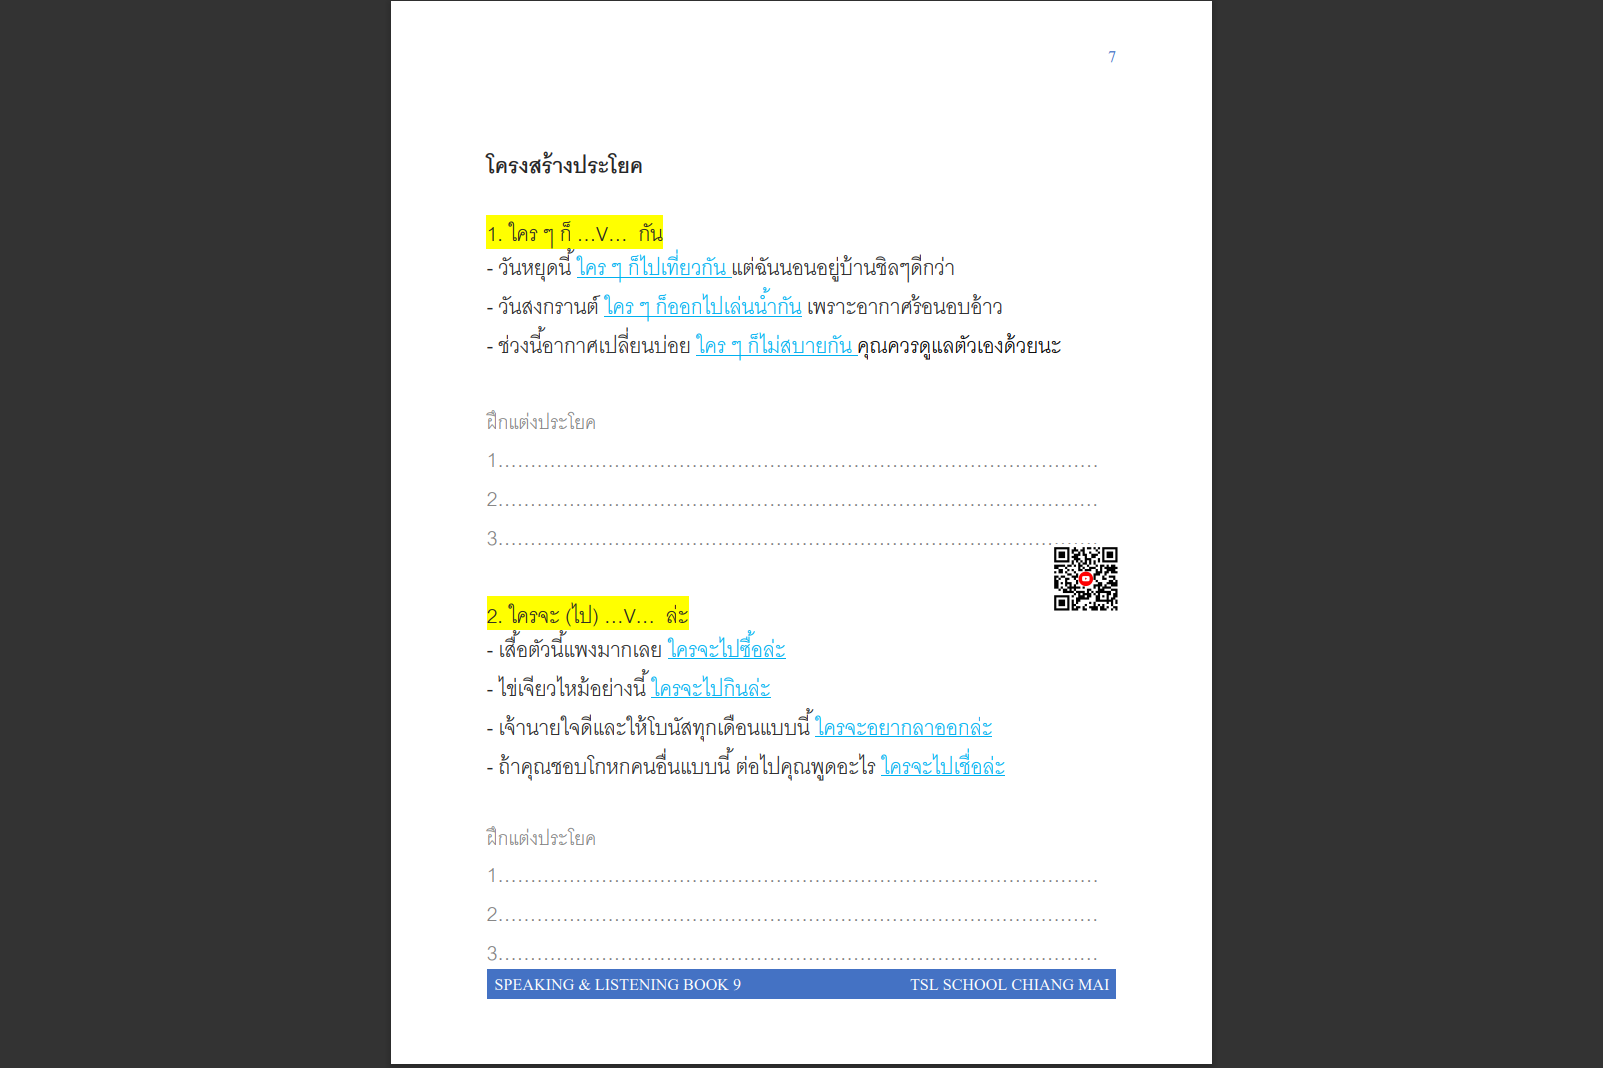 Thai level 9 (with Thai alphabet only) 